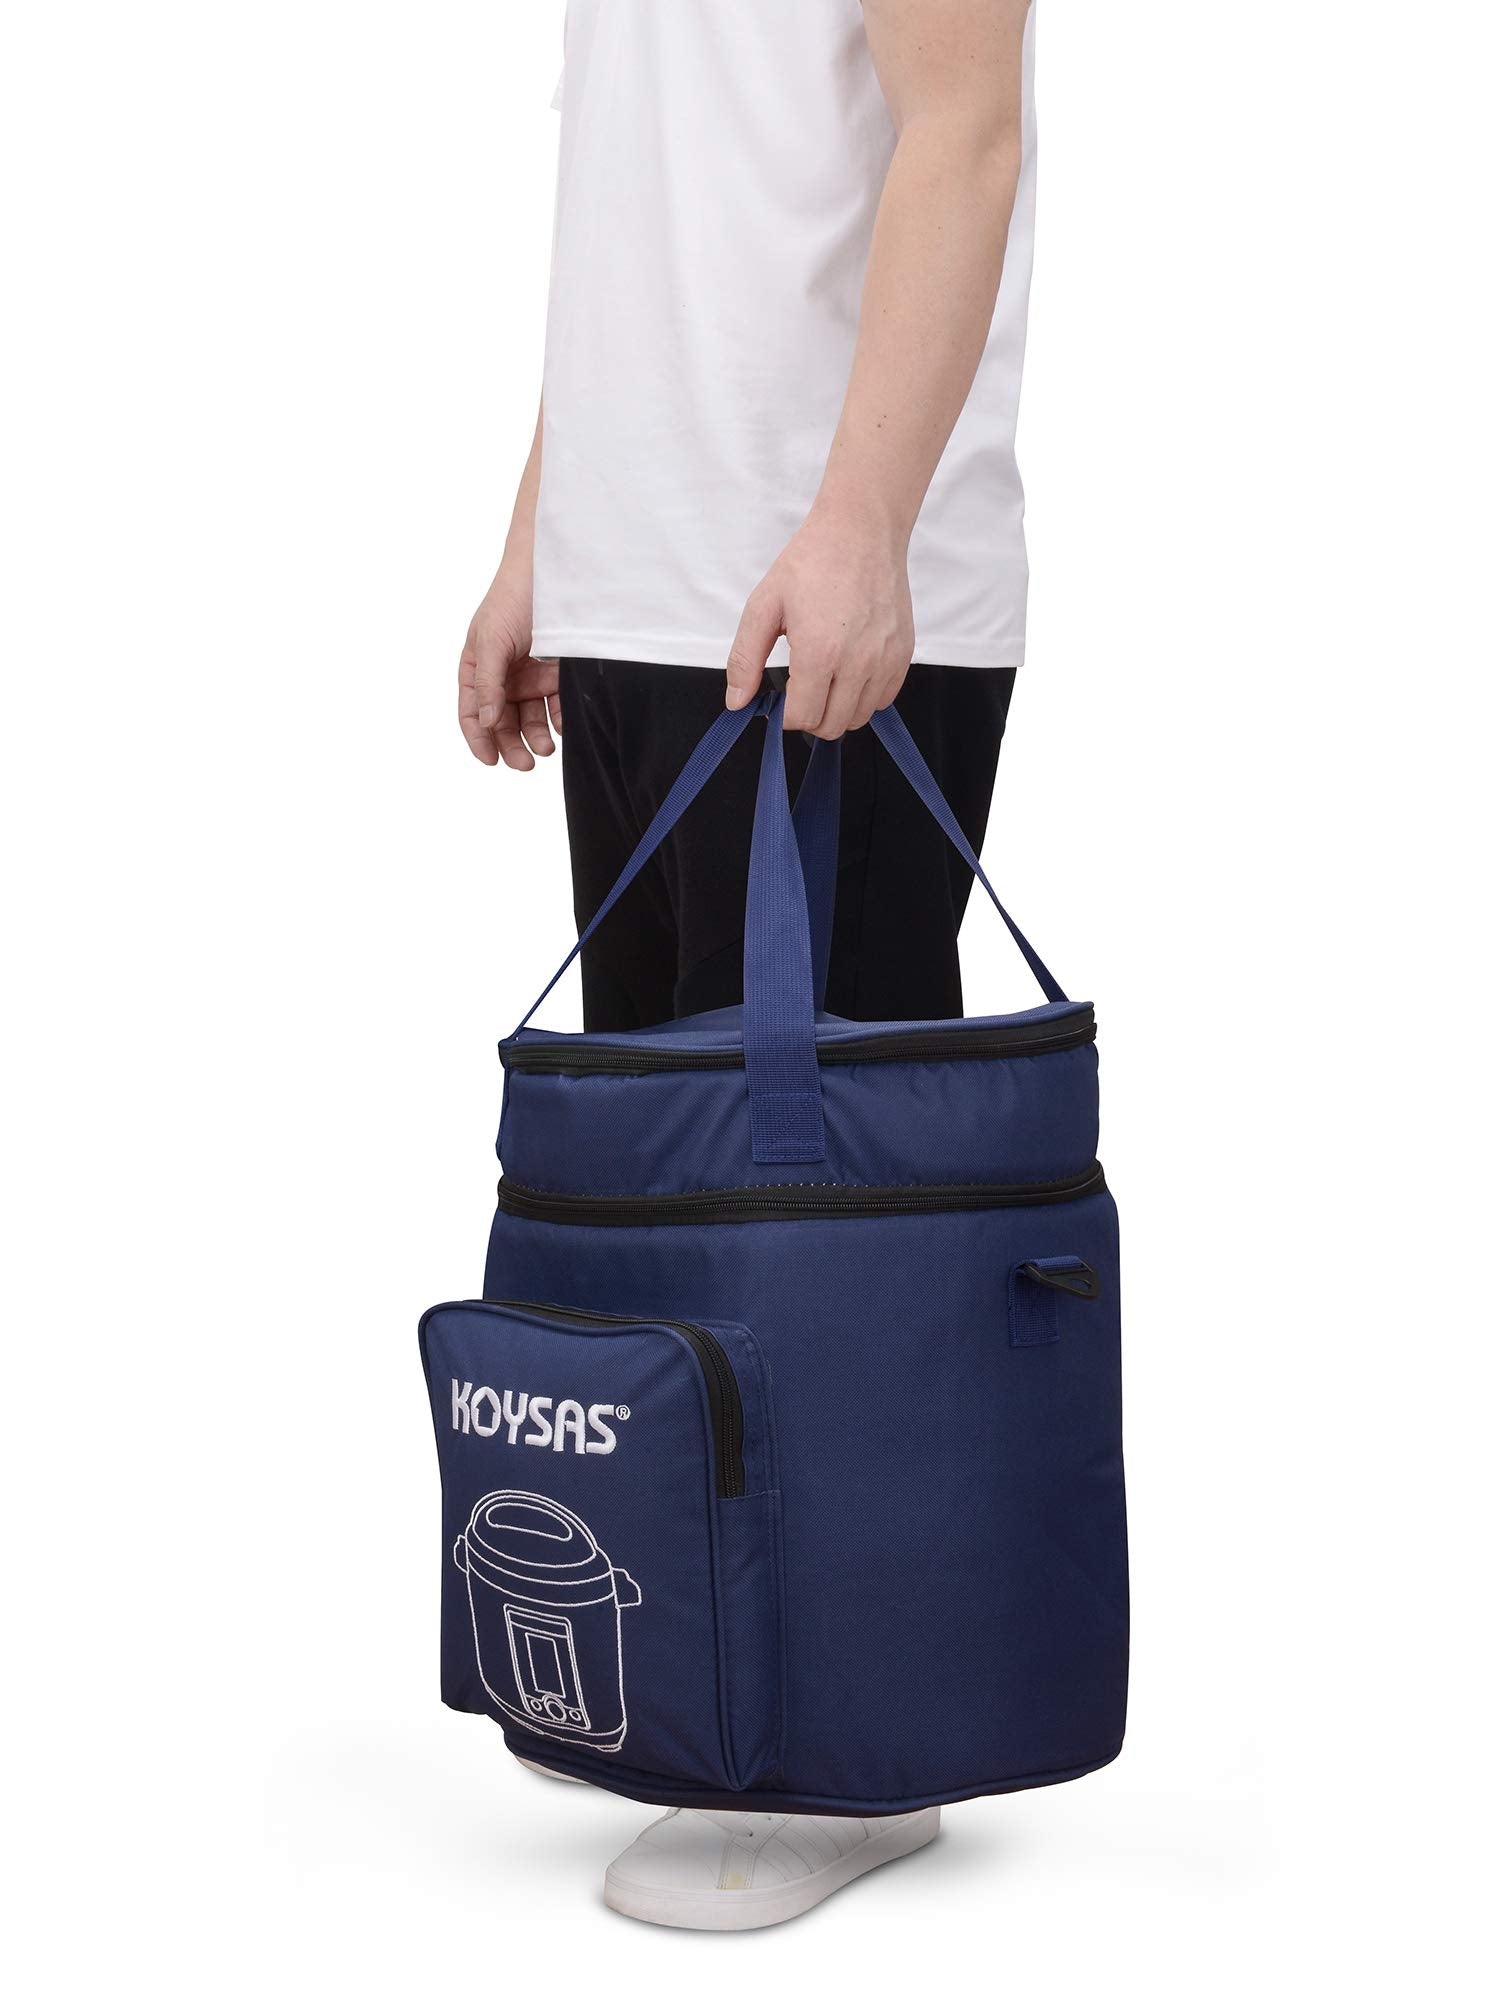 2 Compartments Carry Bag For 8 Quart Instant Pot Pressure Cooker Travel  Tote Bag